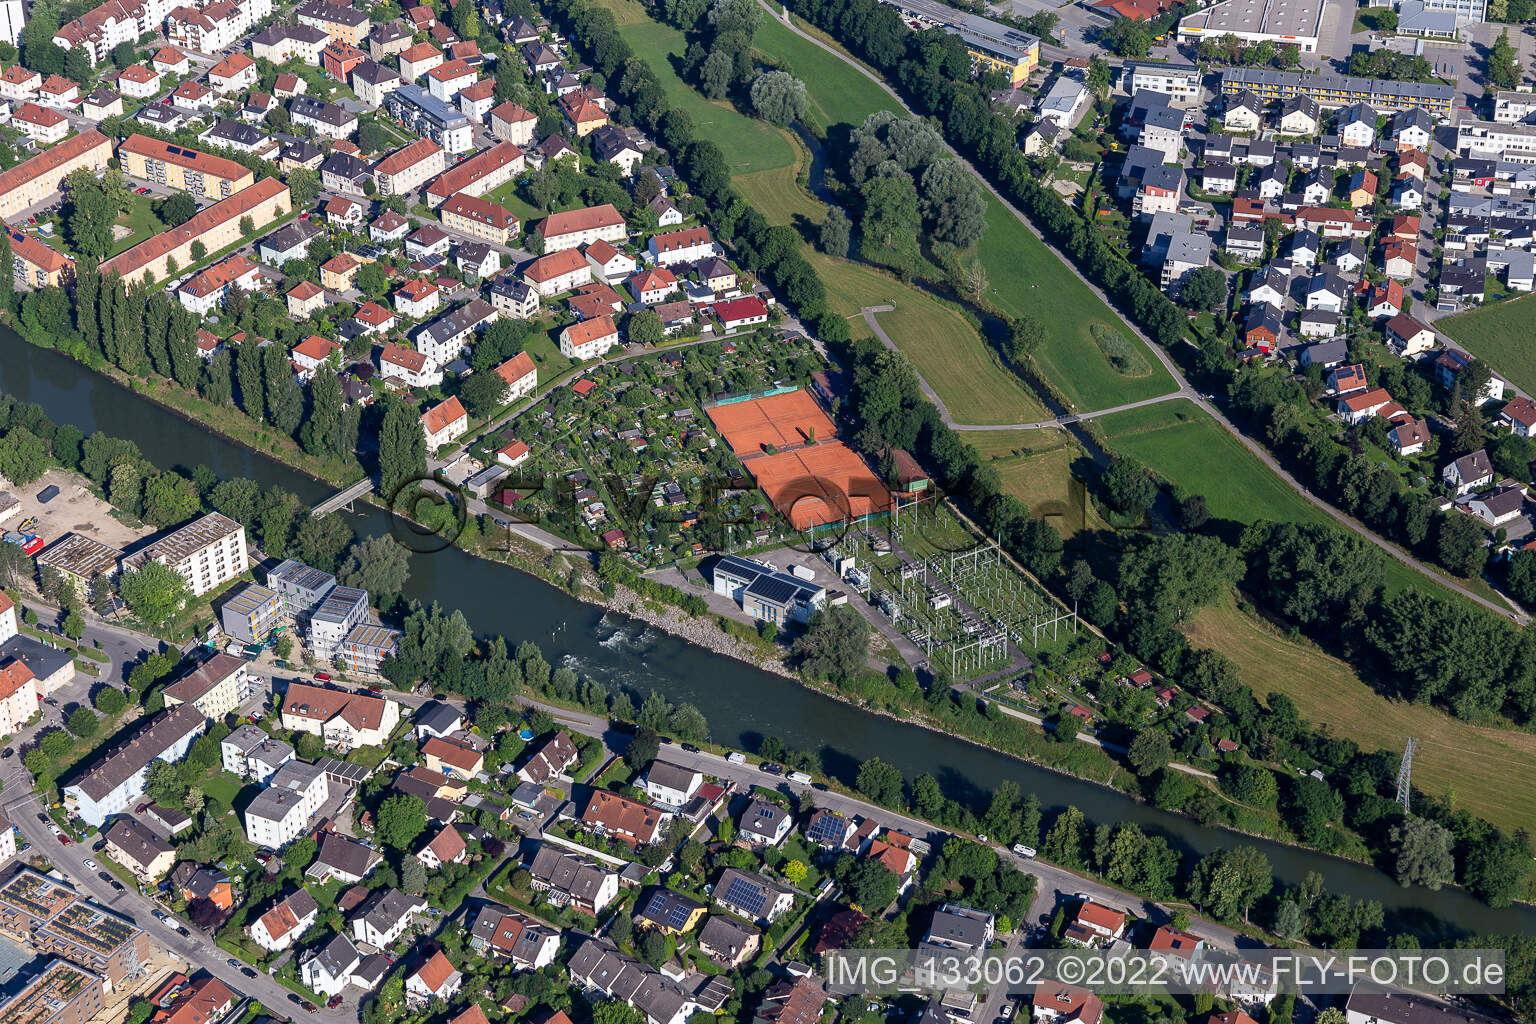 Stadtverband Landshut Bay. Kleingärtner e.V im Bundesland Bayern, Deutschland